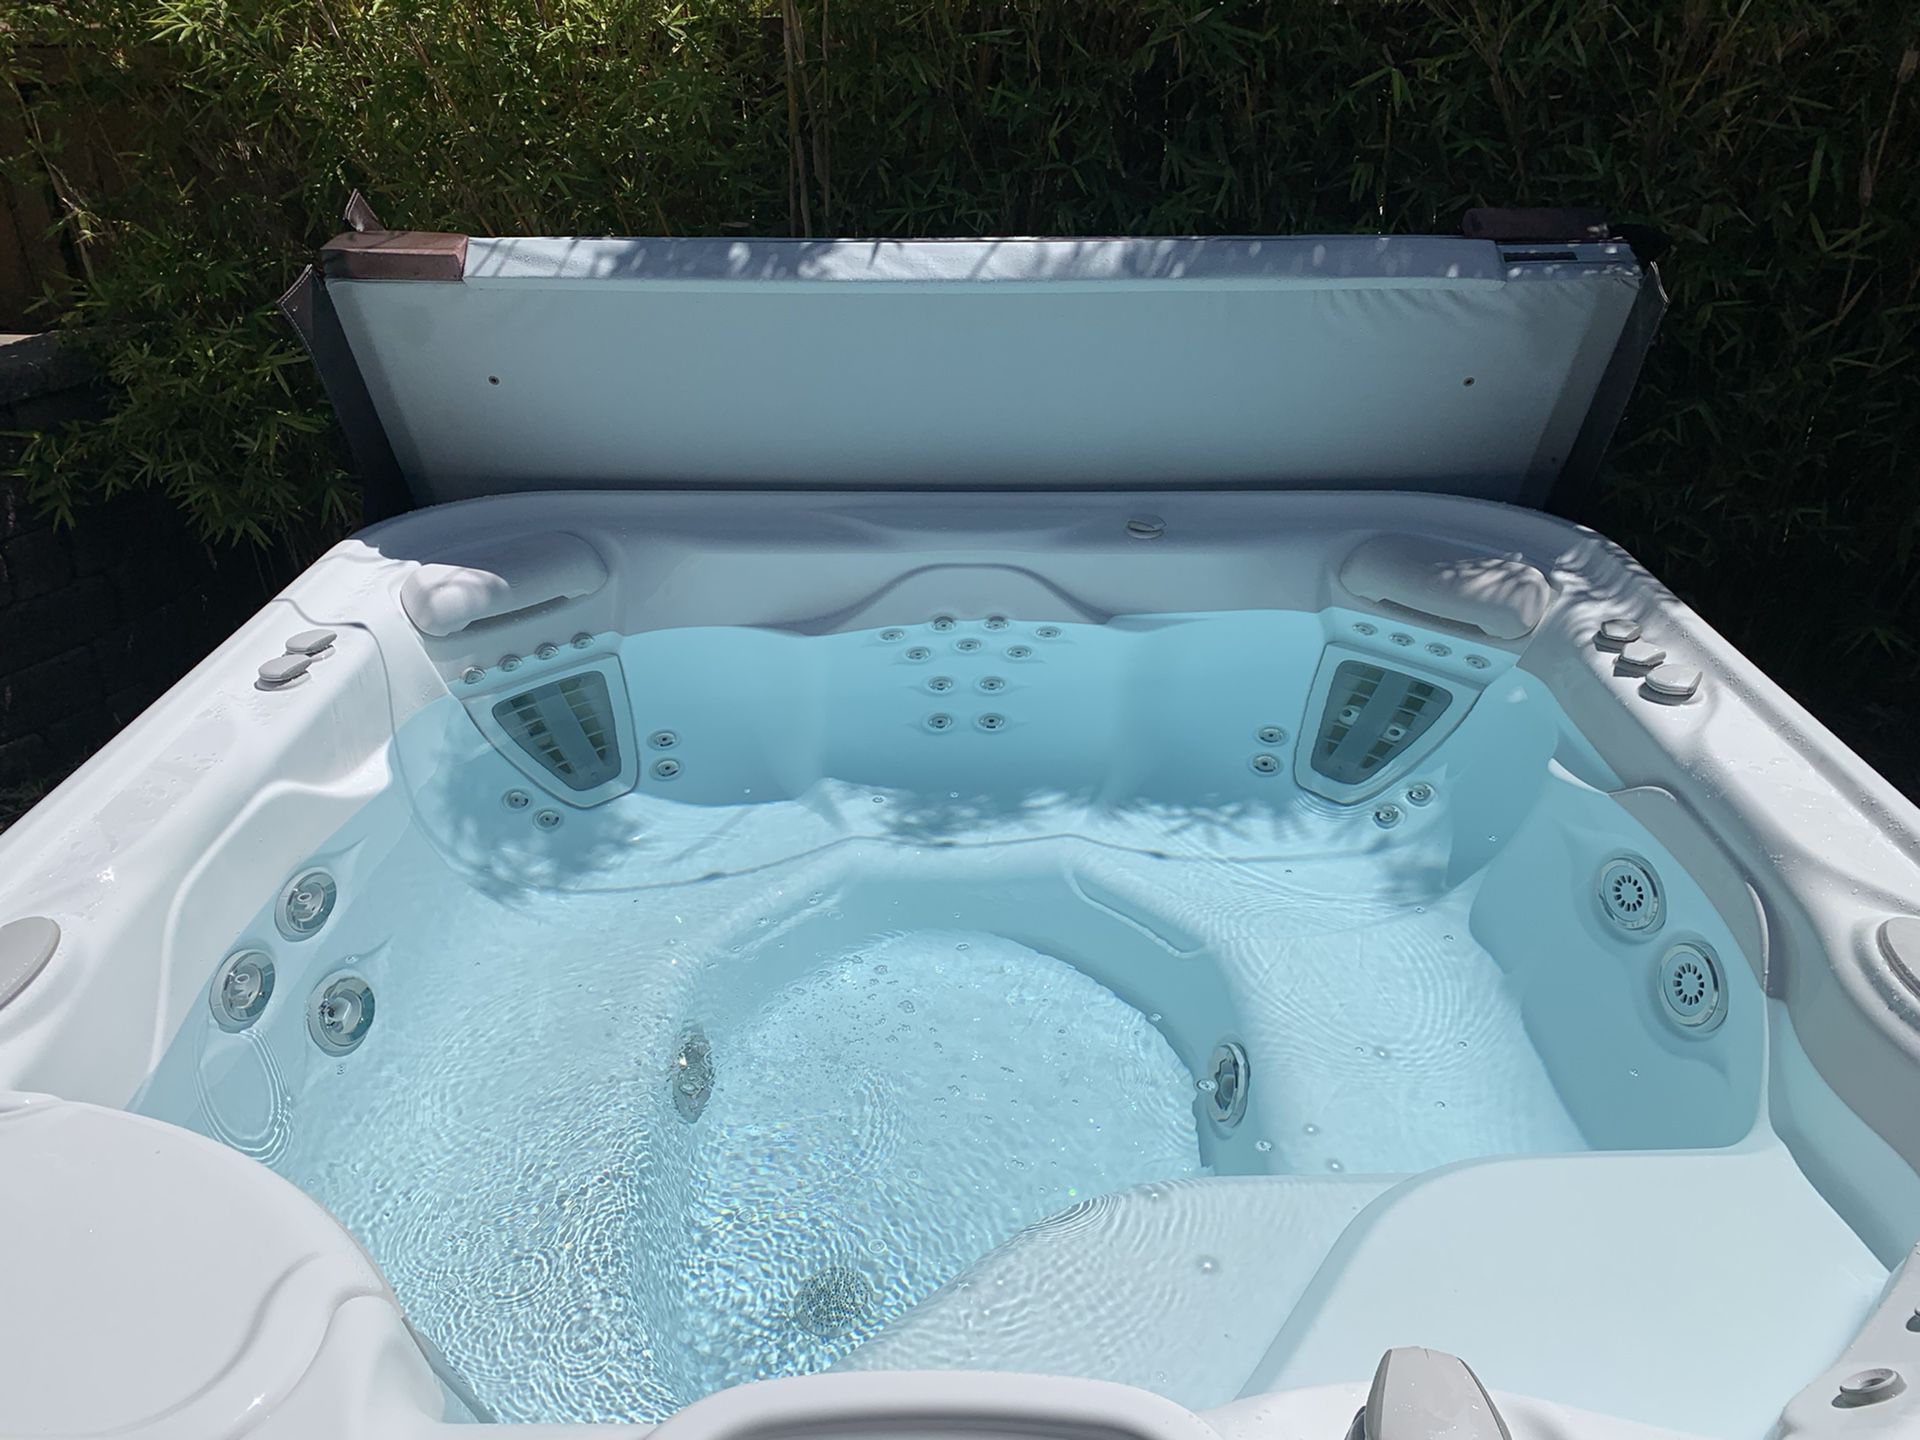 2018 HotSprings Vanguard Hot Tub